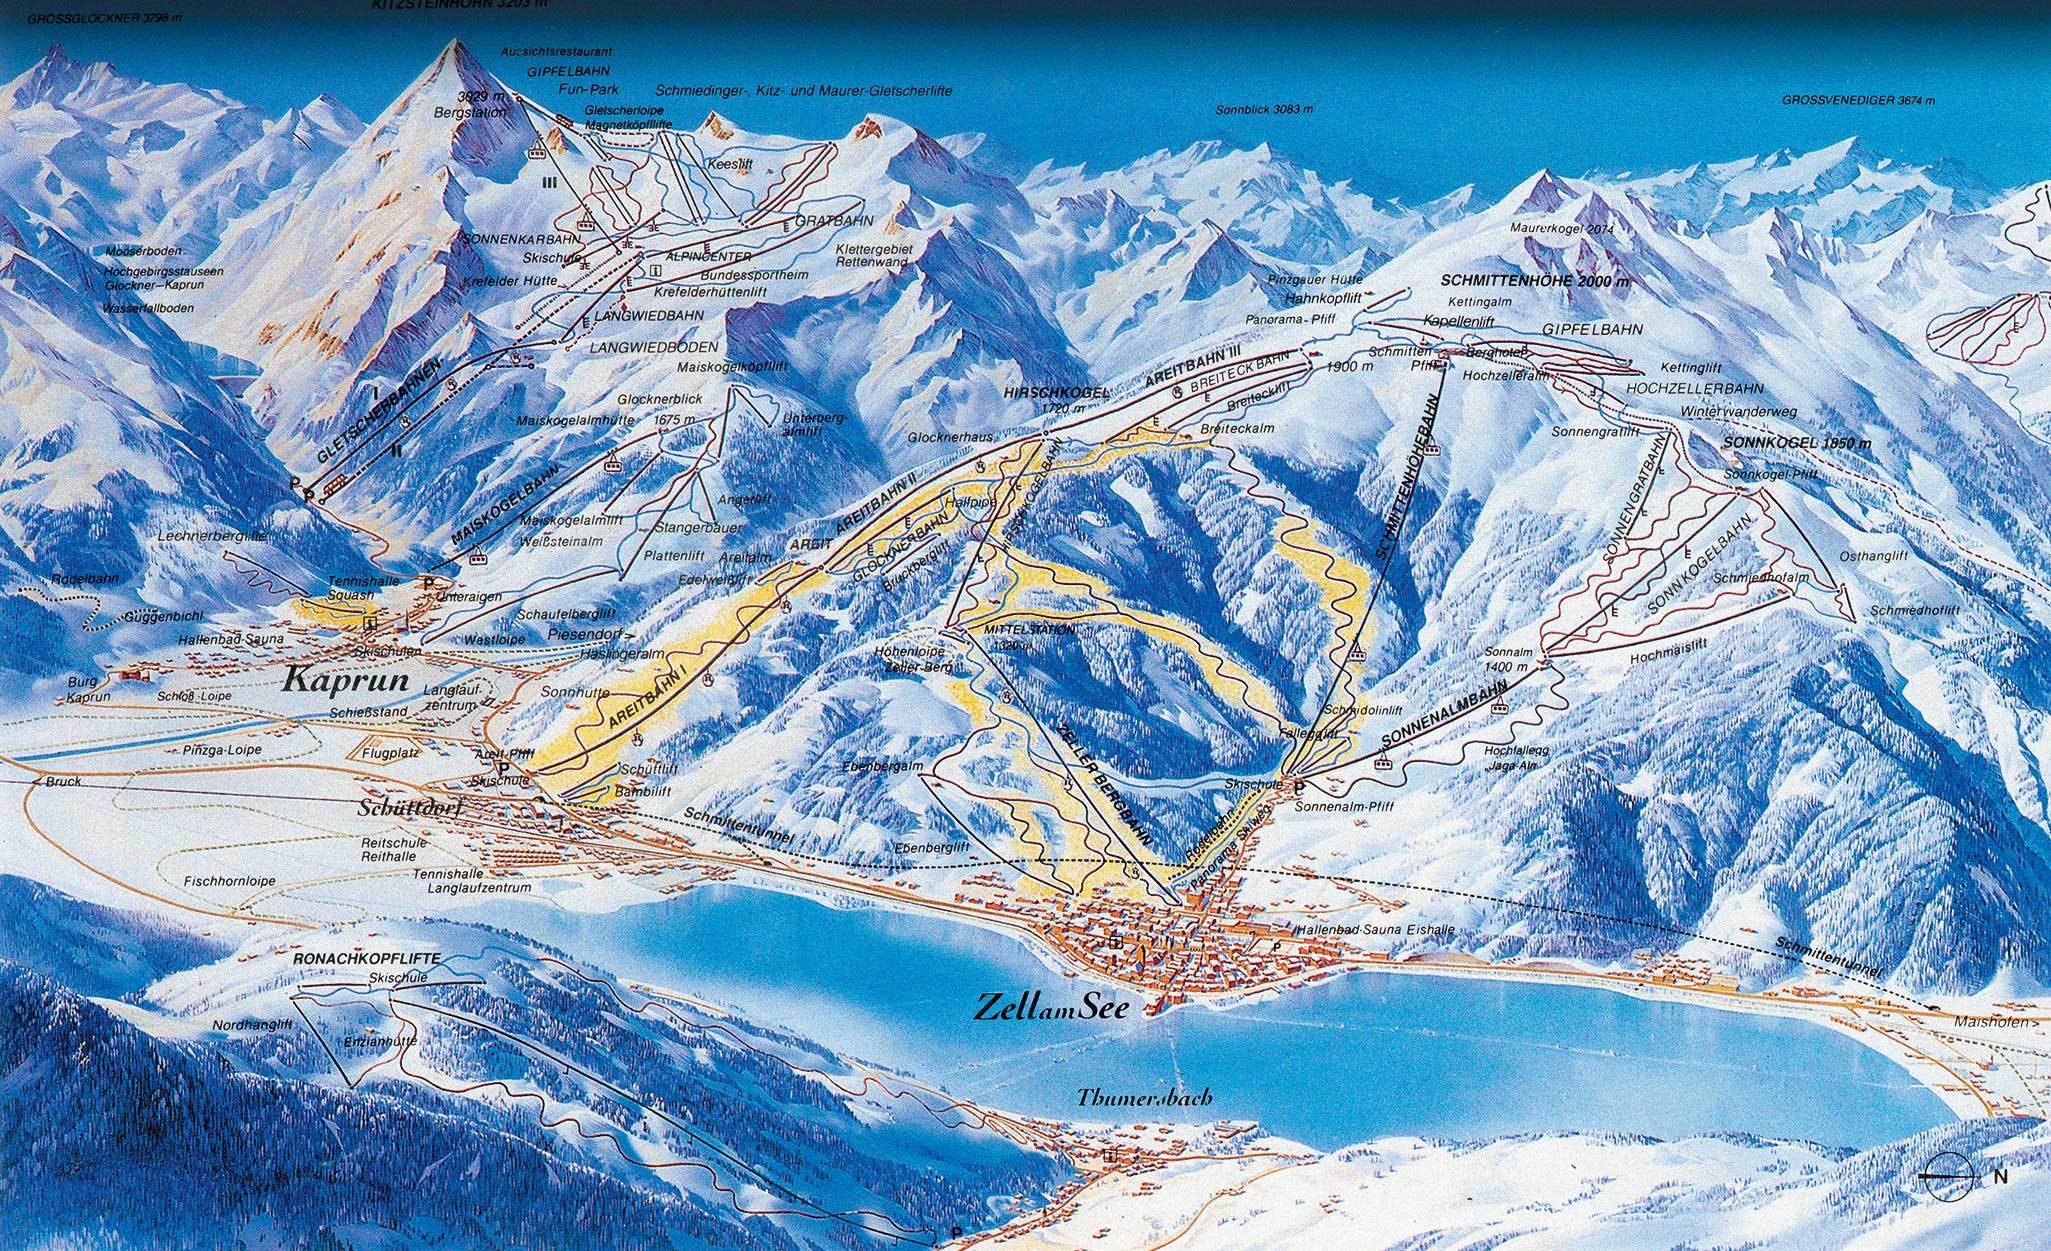 See ski. Цель-ам-Зее Австрия горнолыжный курорт. Цель ам Зее Австрия трассы. Австрия лыжный курорт Капрун. Ледник Капрун Австрия.